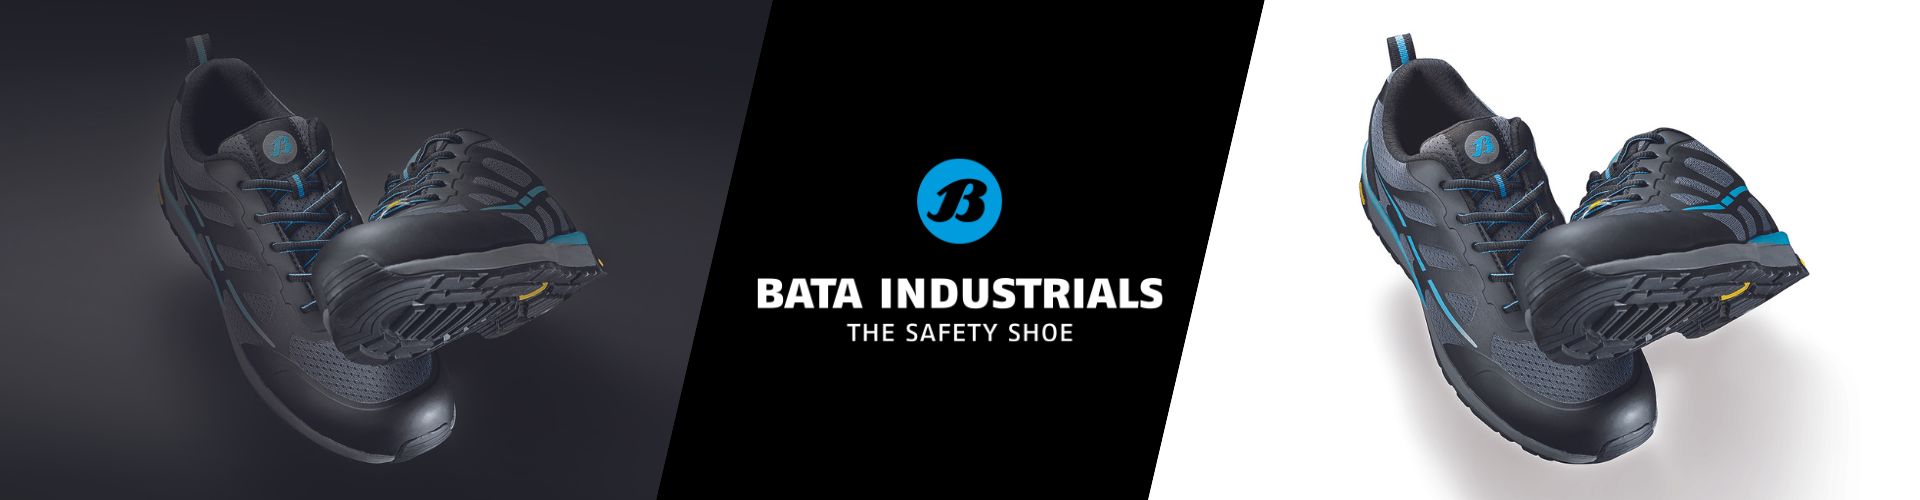 Bata Industrials: Sicherheitsschuhe | DEXIS Austria